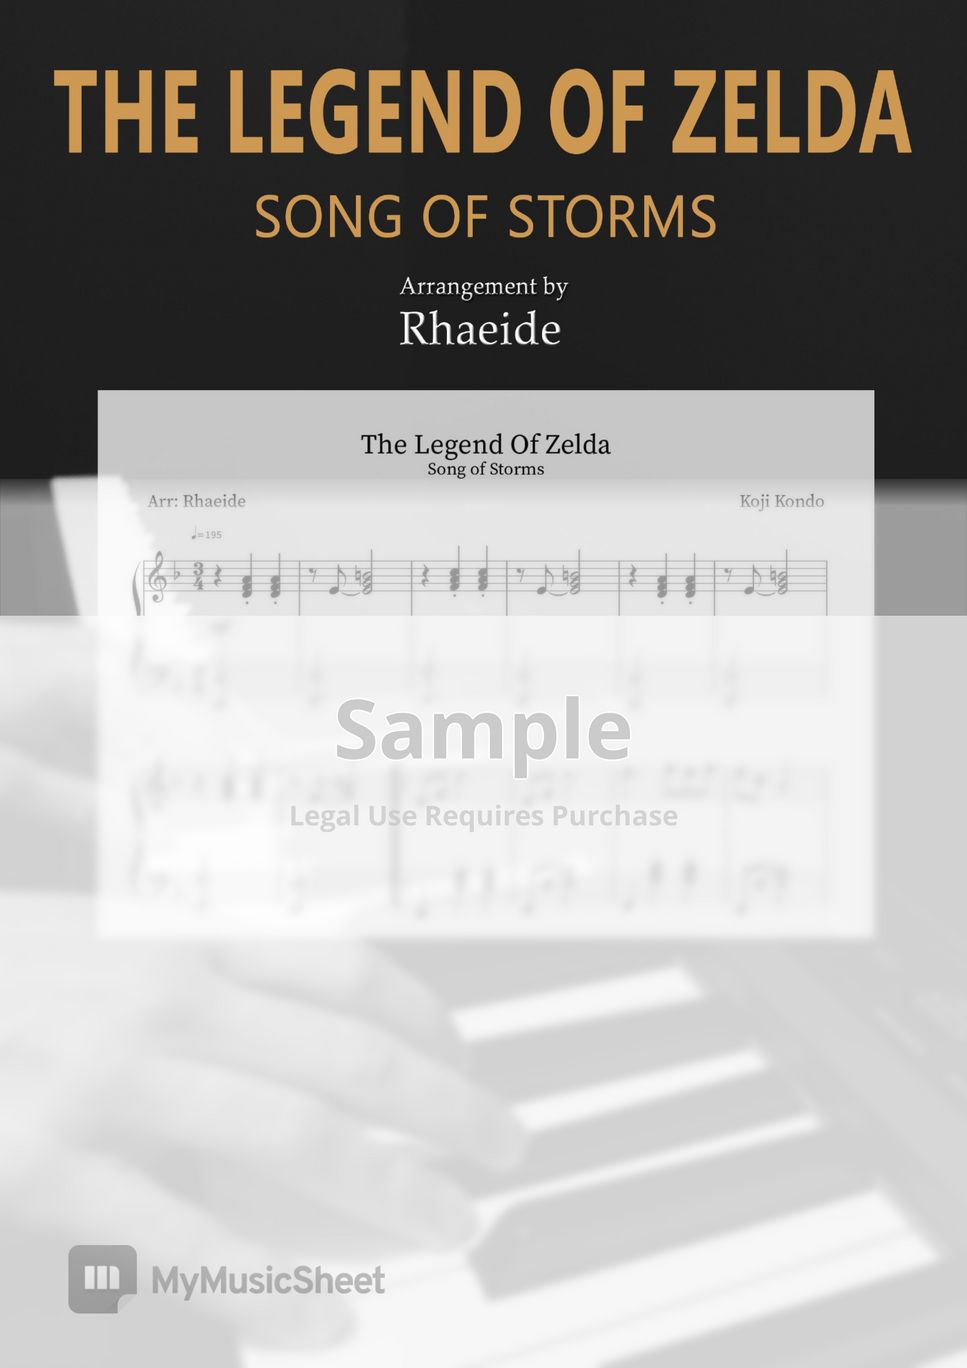 The Legend Of Zelda - Song Of Storms (Koji Kondo) by Rhaeide